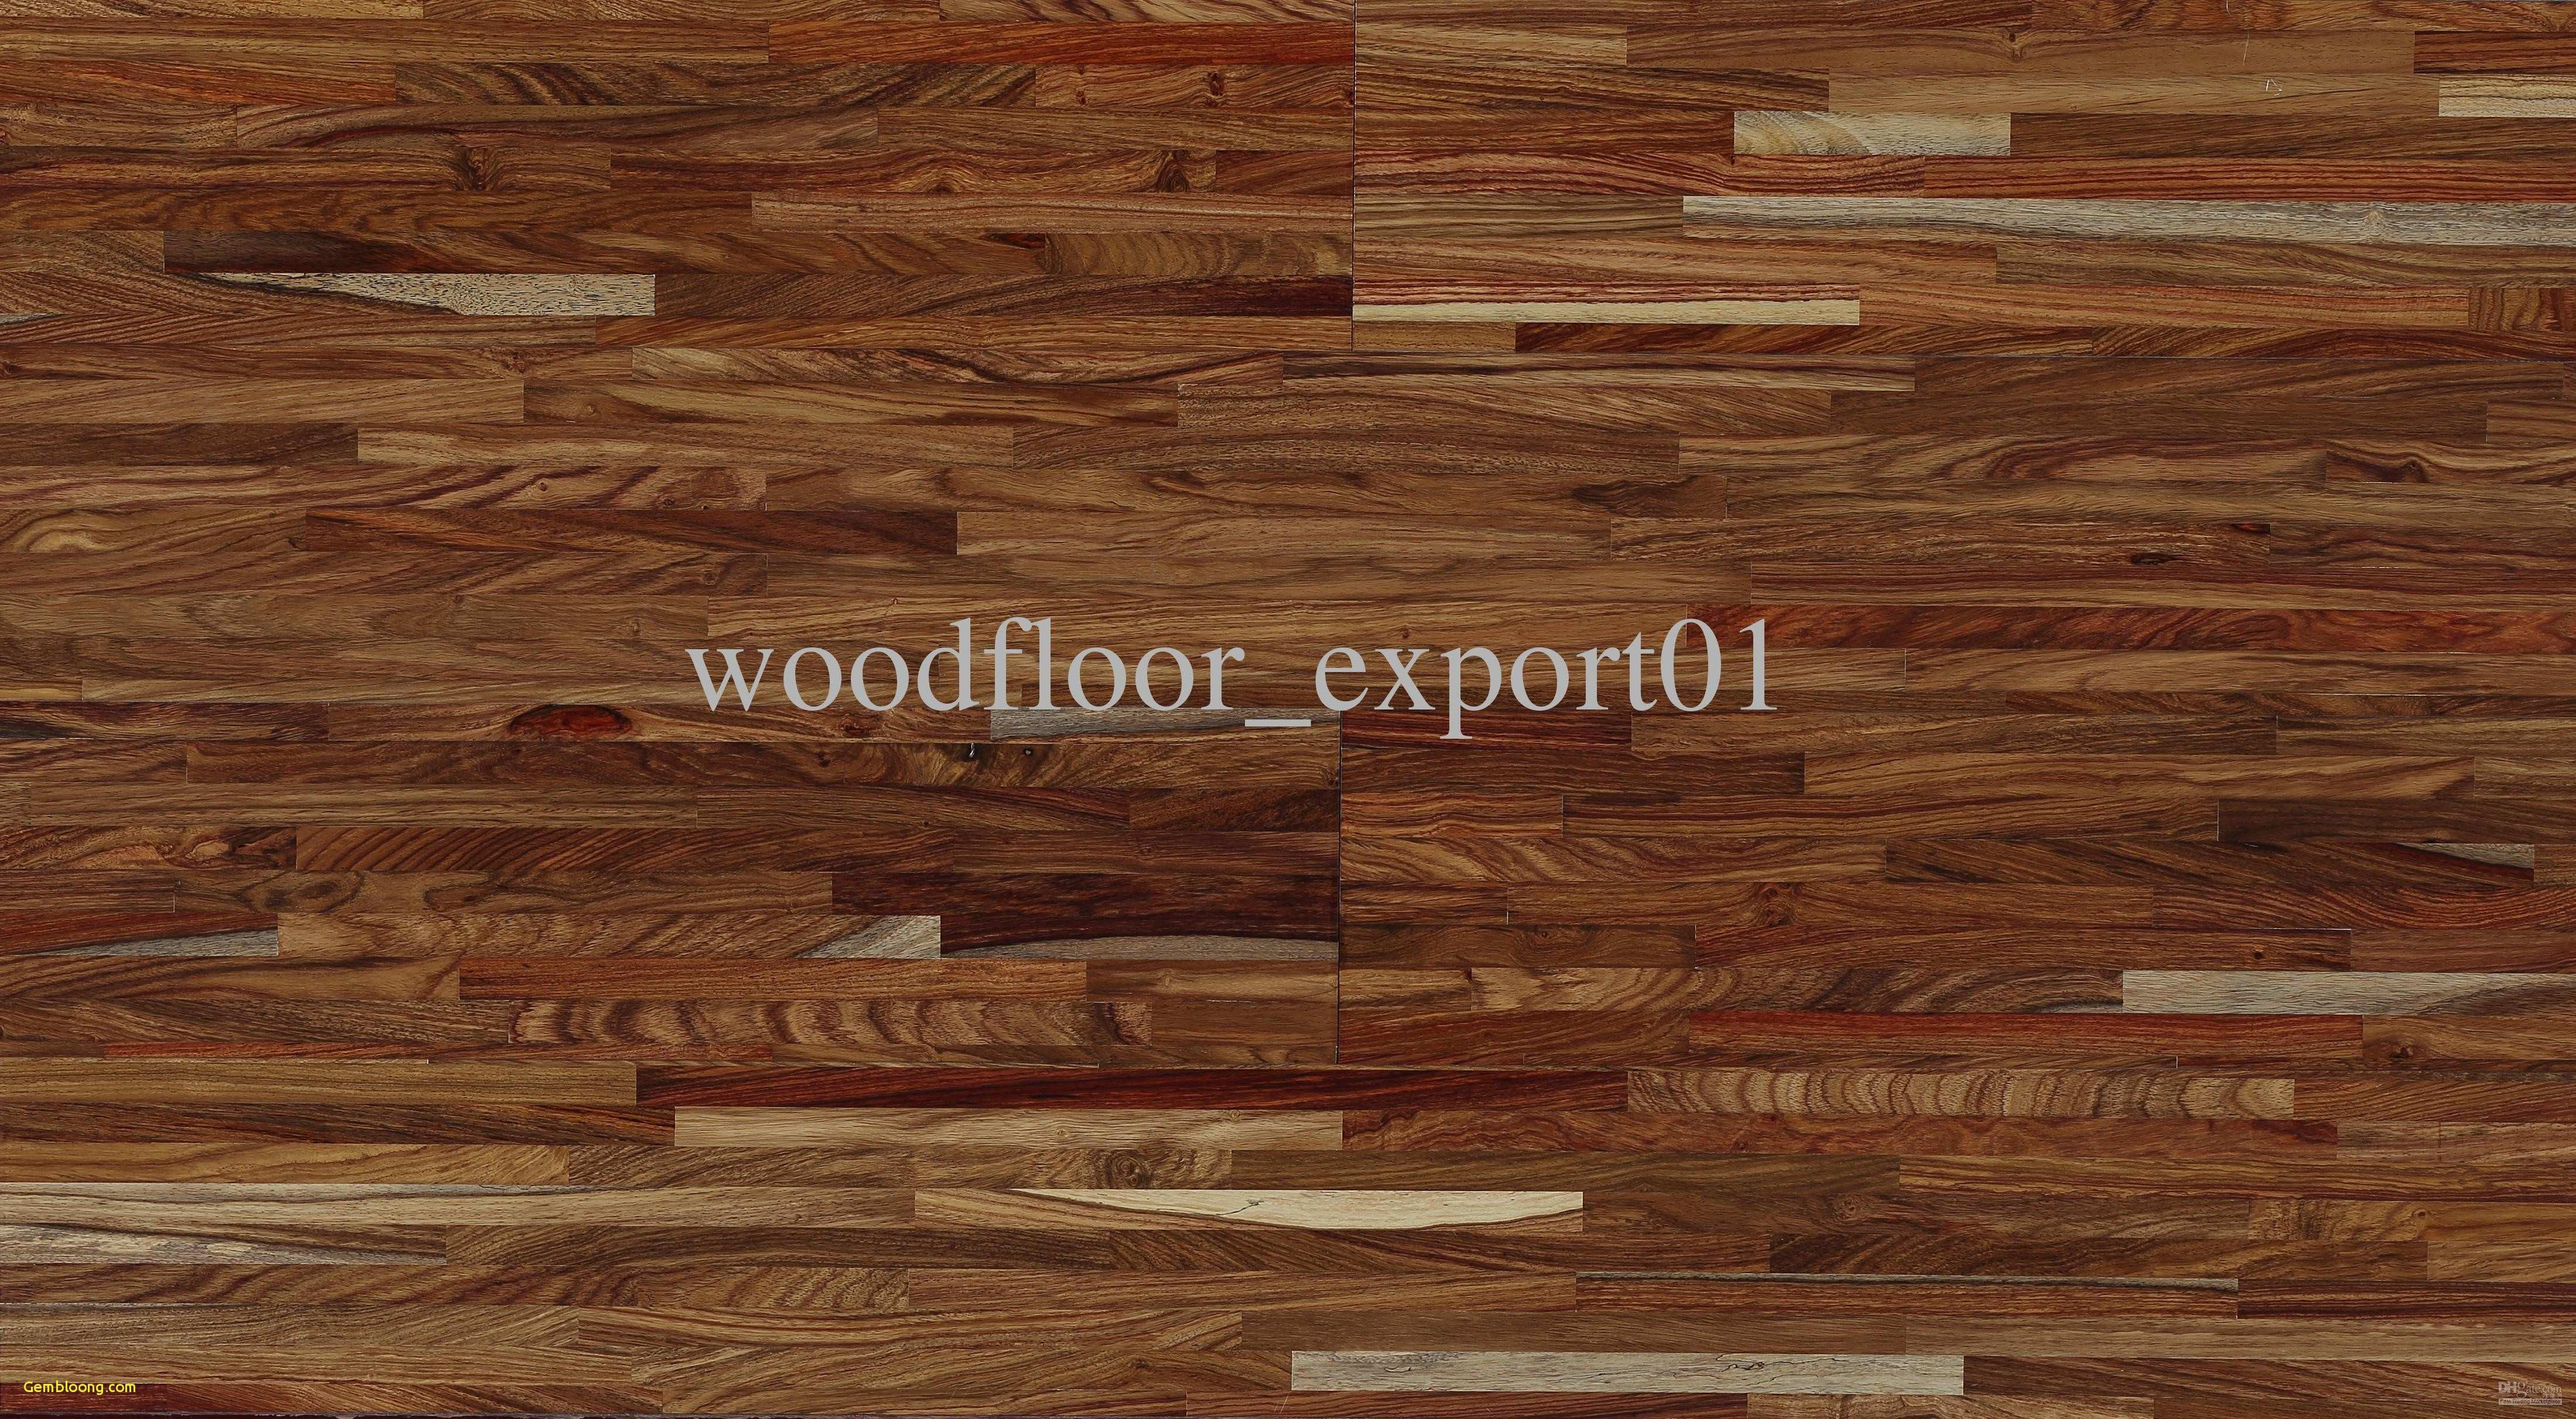 discount hardwood flooring of hardwood flooring designs facesinnature regarding hardwood flooring designs flooring nj furniture design hard wood flooring new 0d grace place